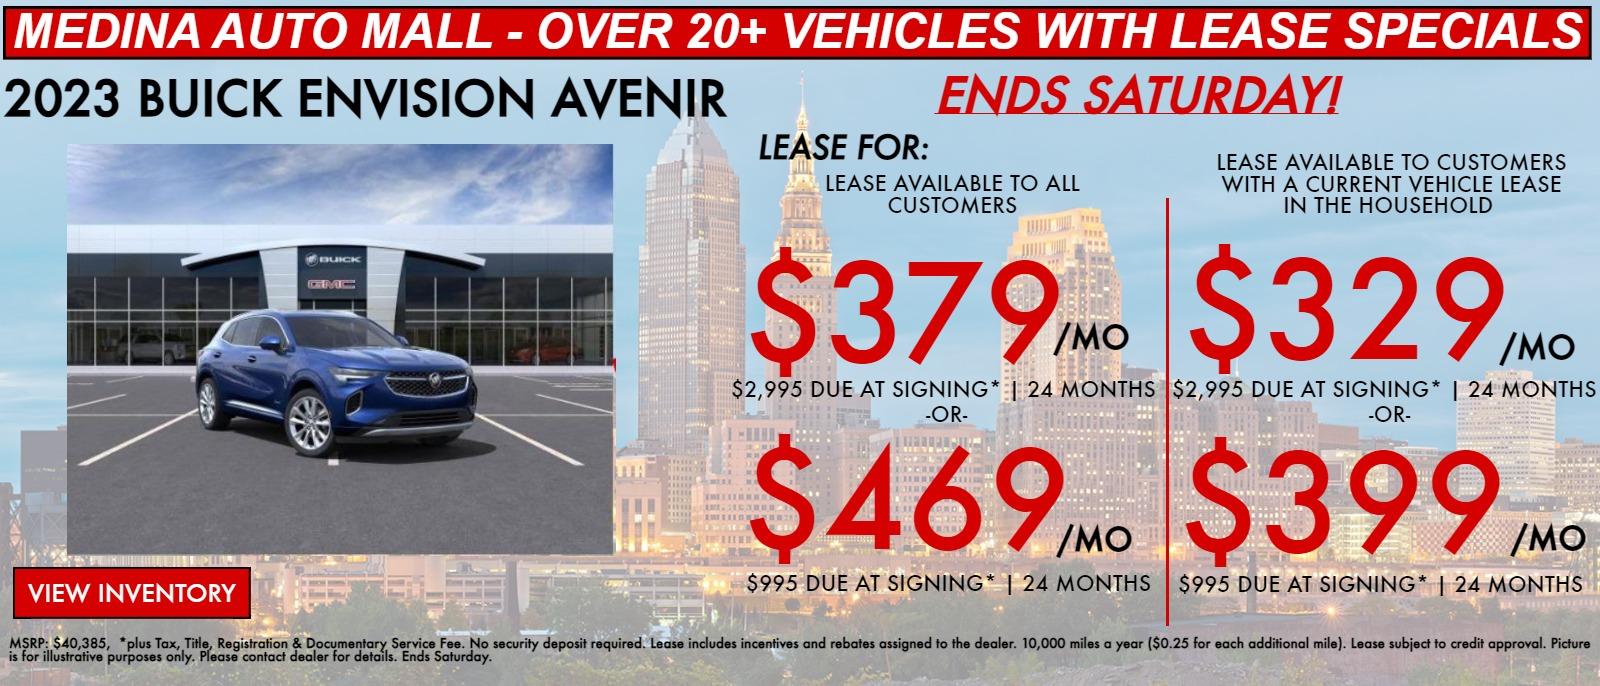 2024 Buick Envision Lease Specials for Cleveland & Medina Medina Auto